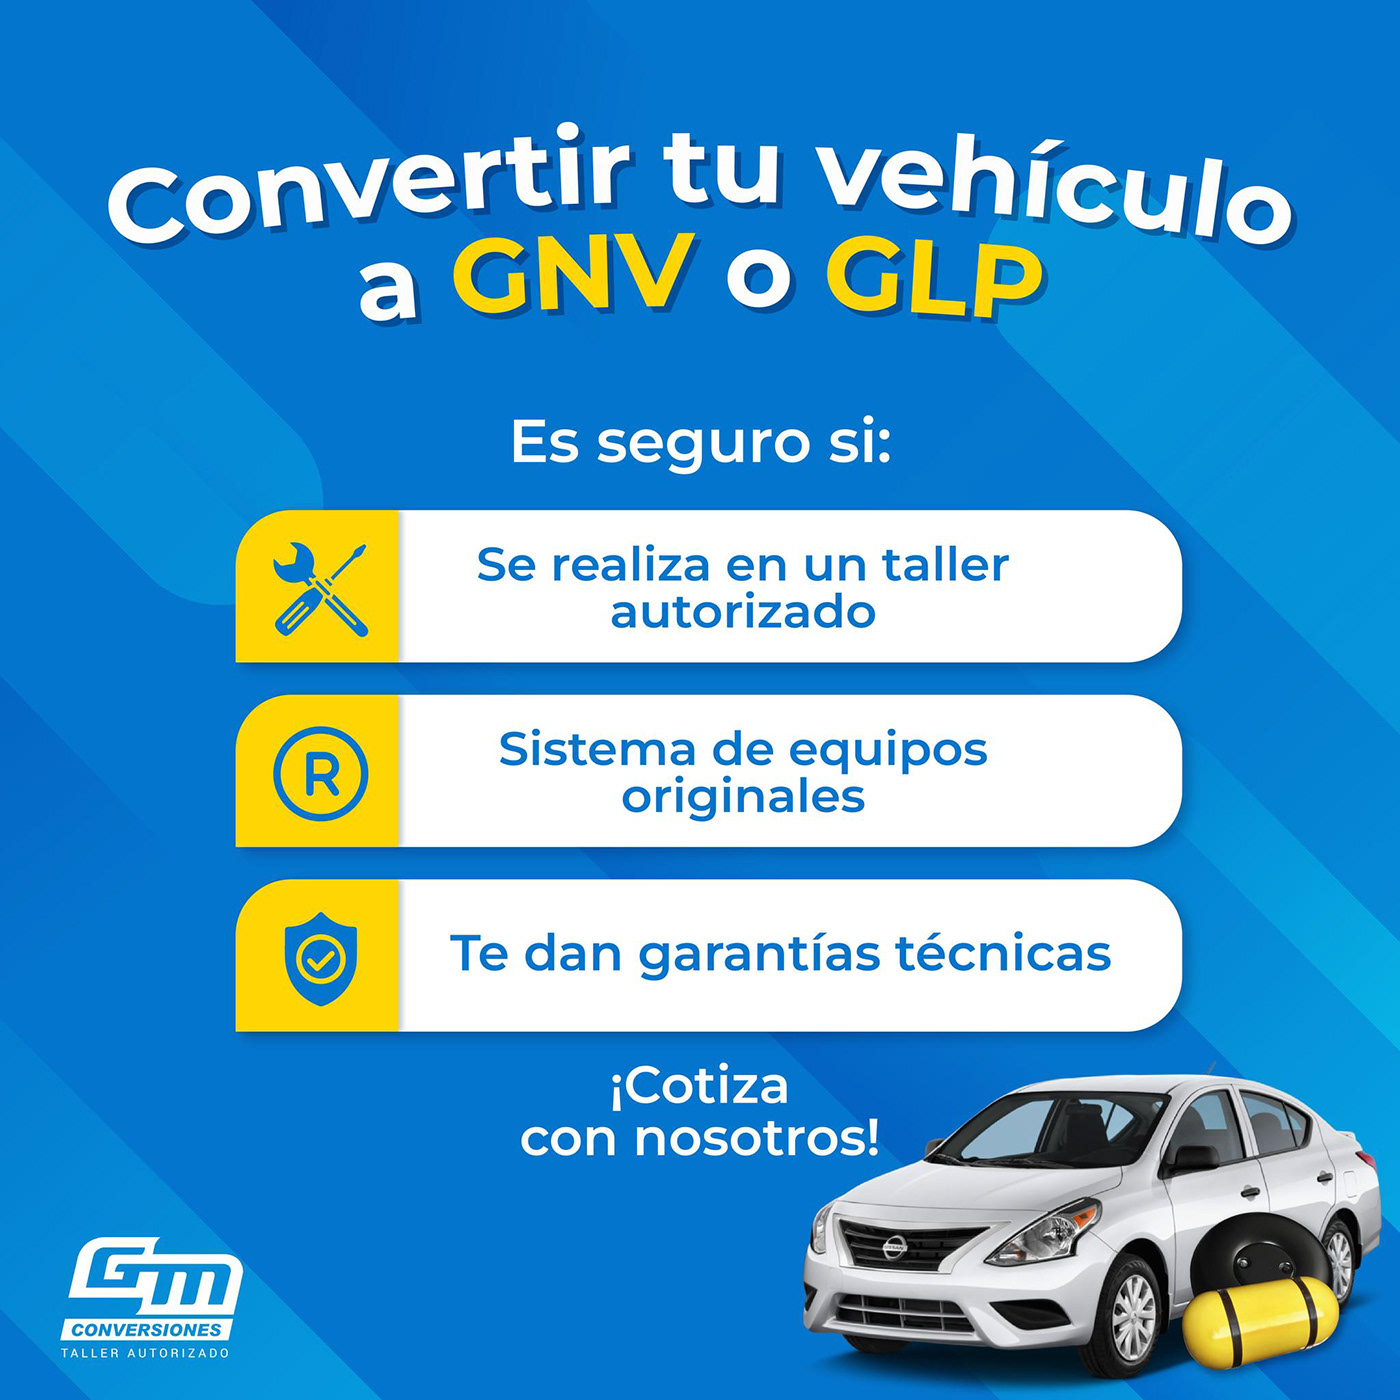 car conversion design Gas GNV Social media post Vehicle